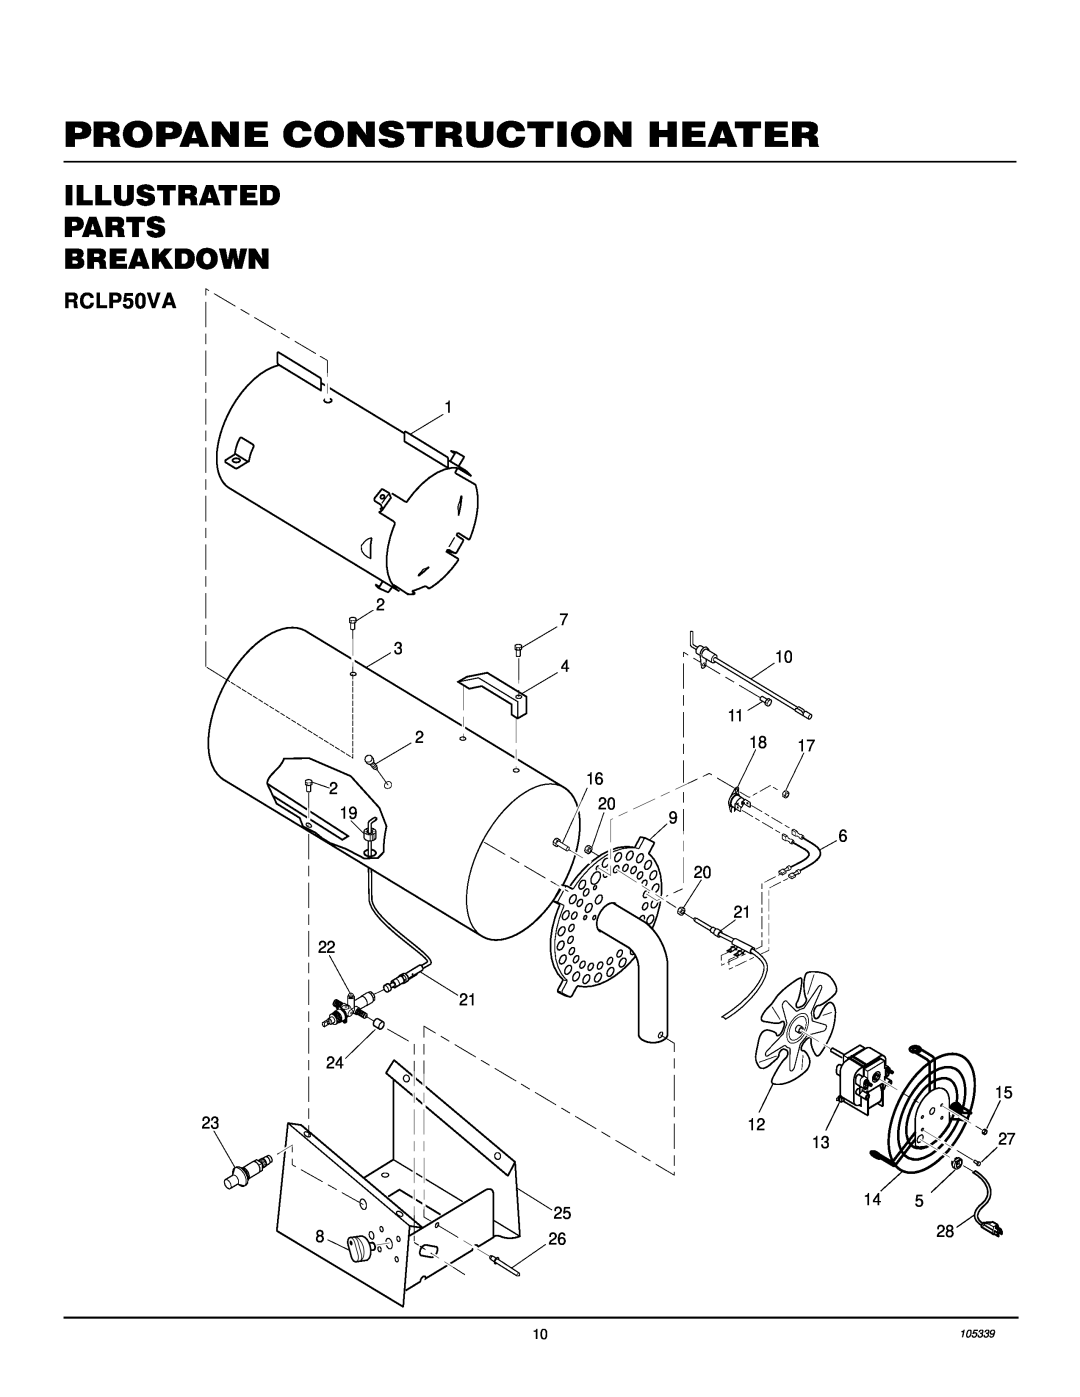 Desa RCLP50VA owner manual Illustrated Parts Breakdown, Propane Construction Heater 